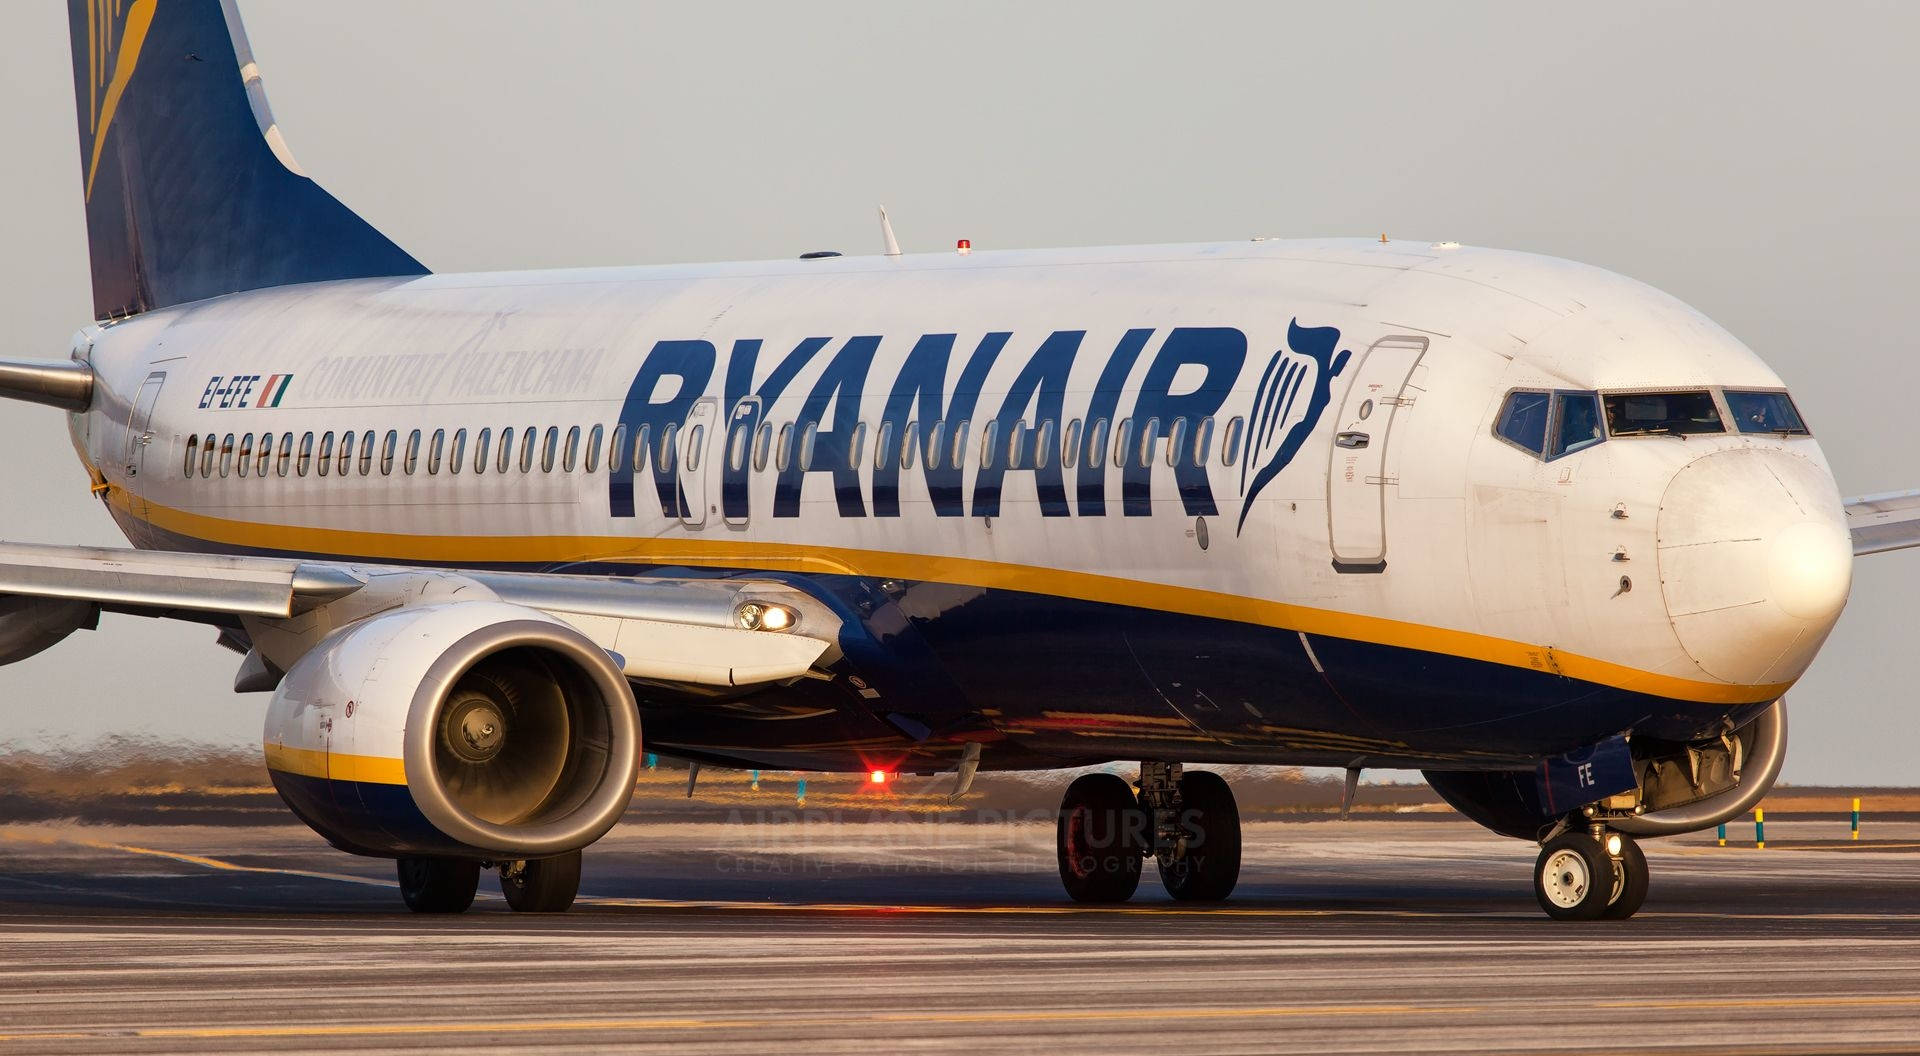 Ryanair Logo On Side Of Plane Wallpaper